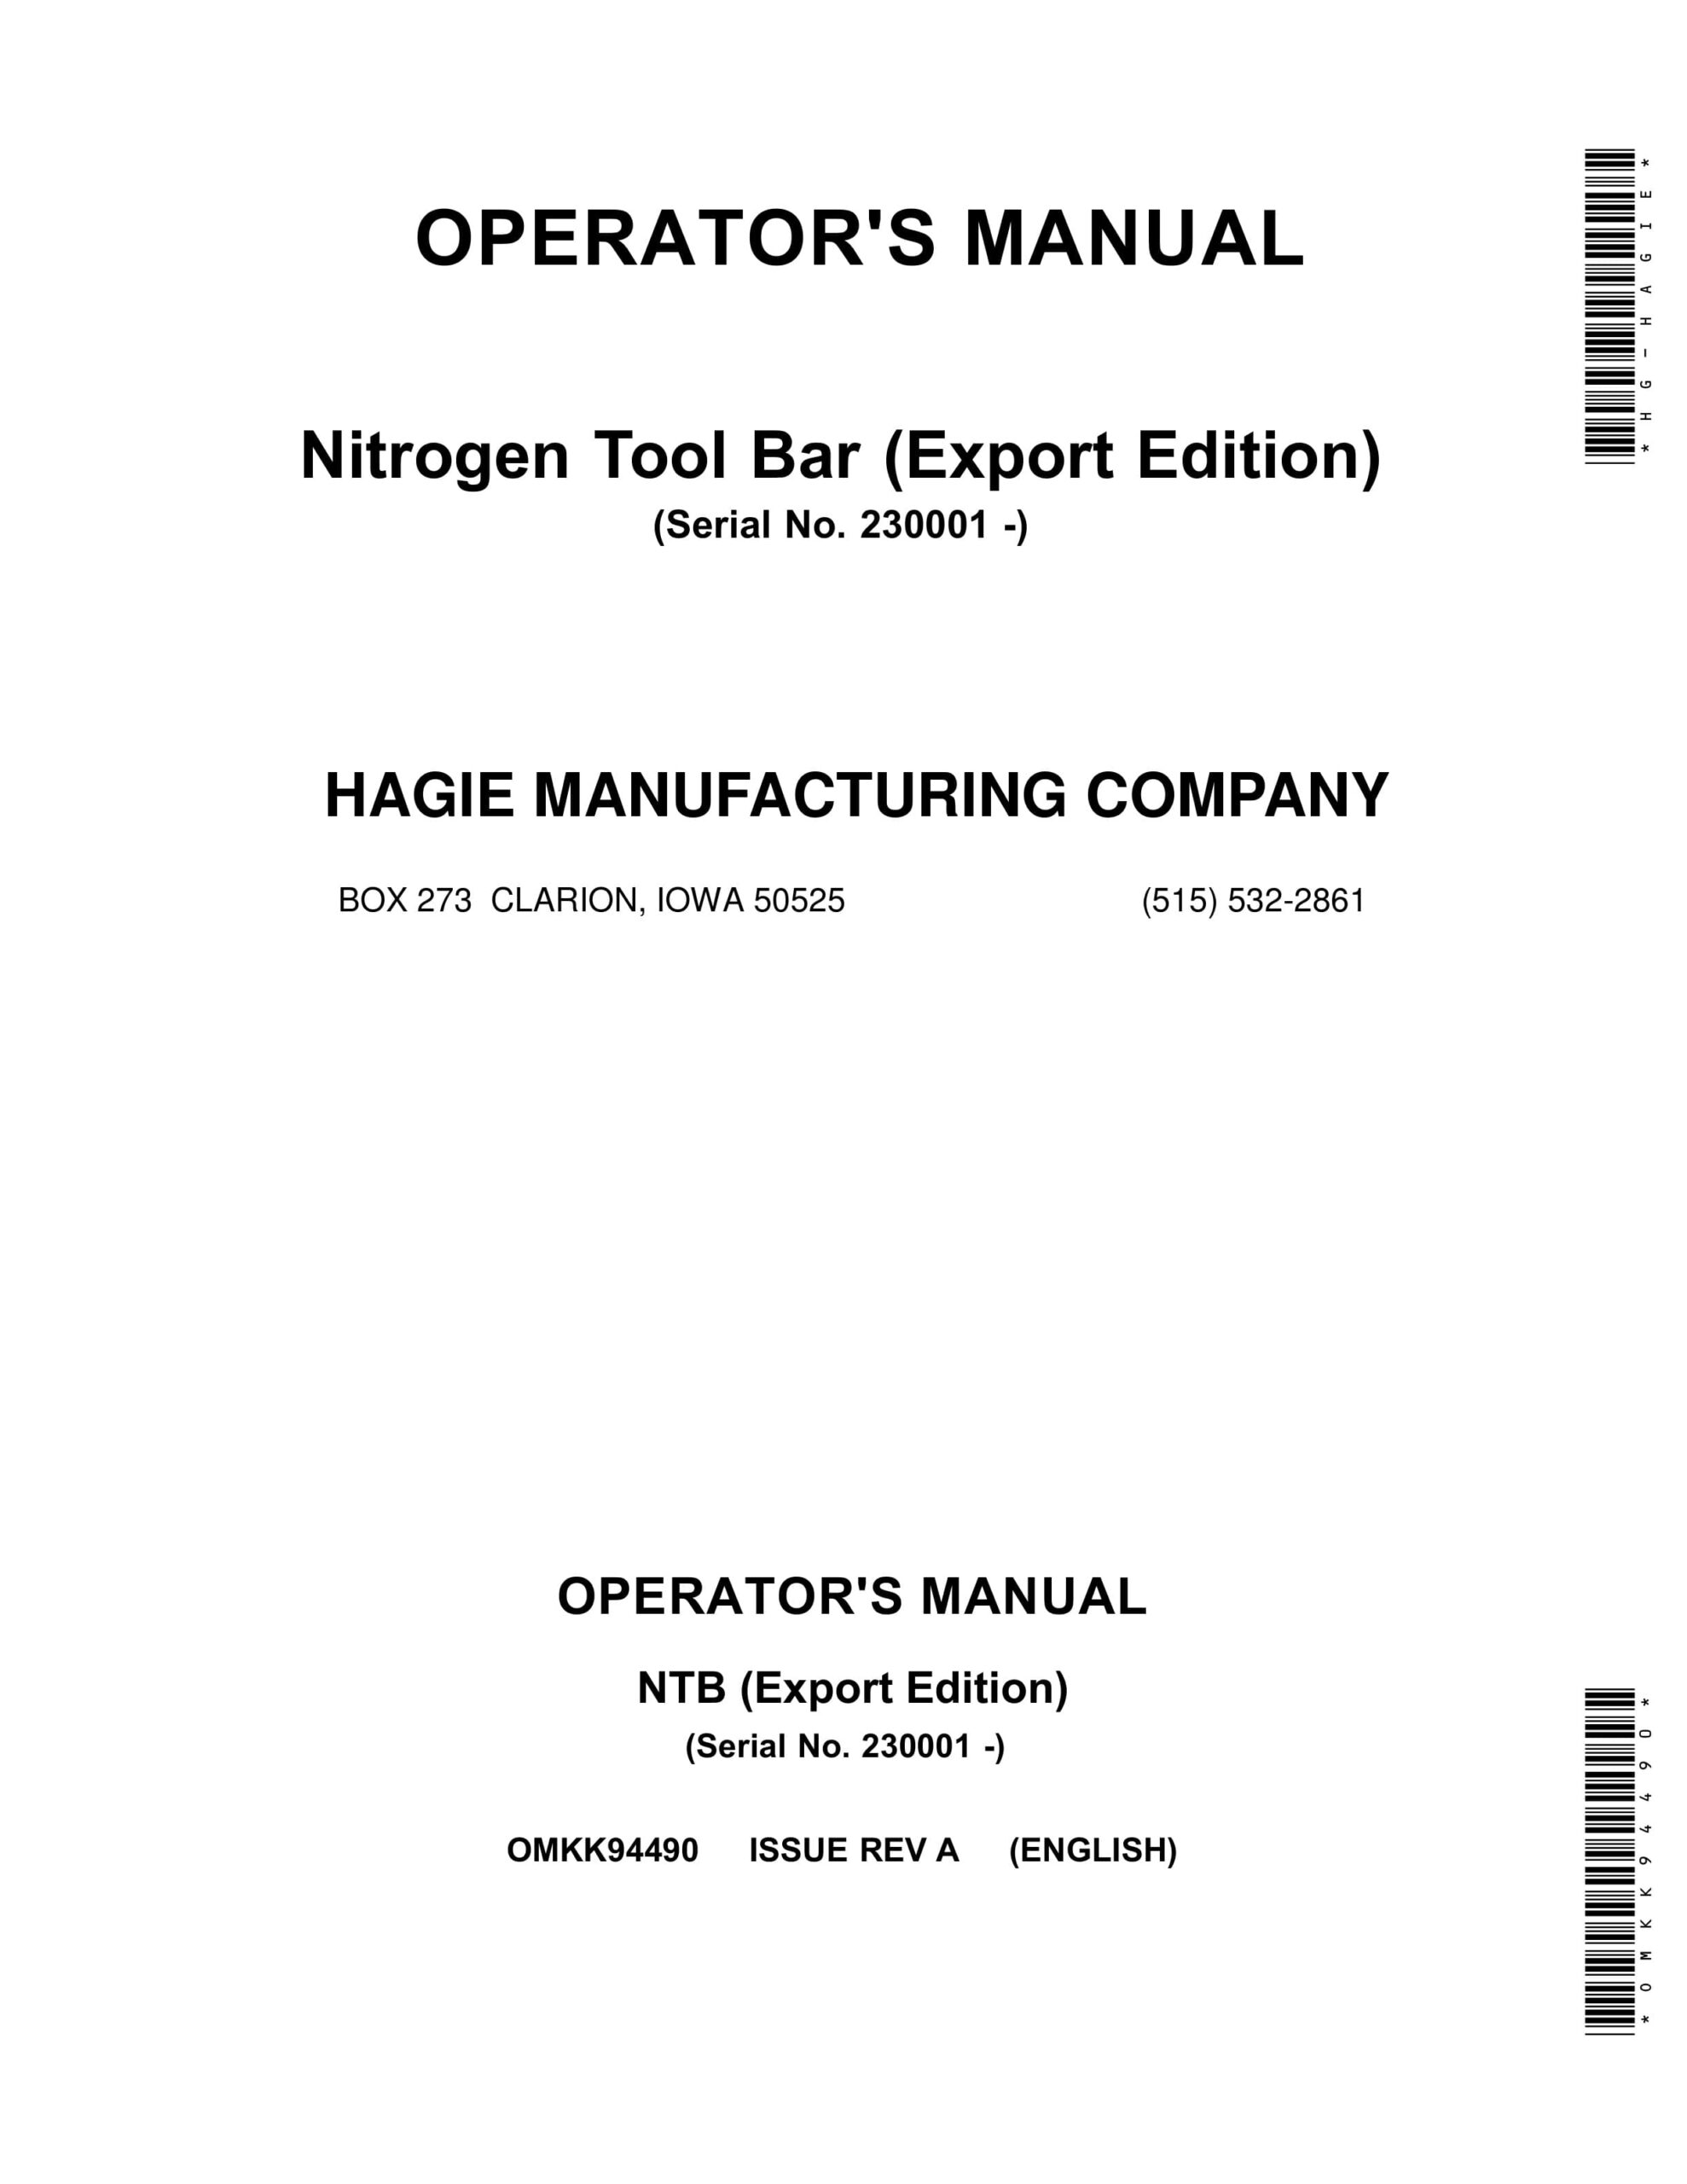 John Deere Nitrogen Tool Bar Operator Manual OMKK94490-1